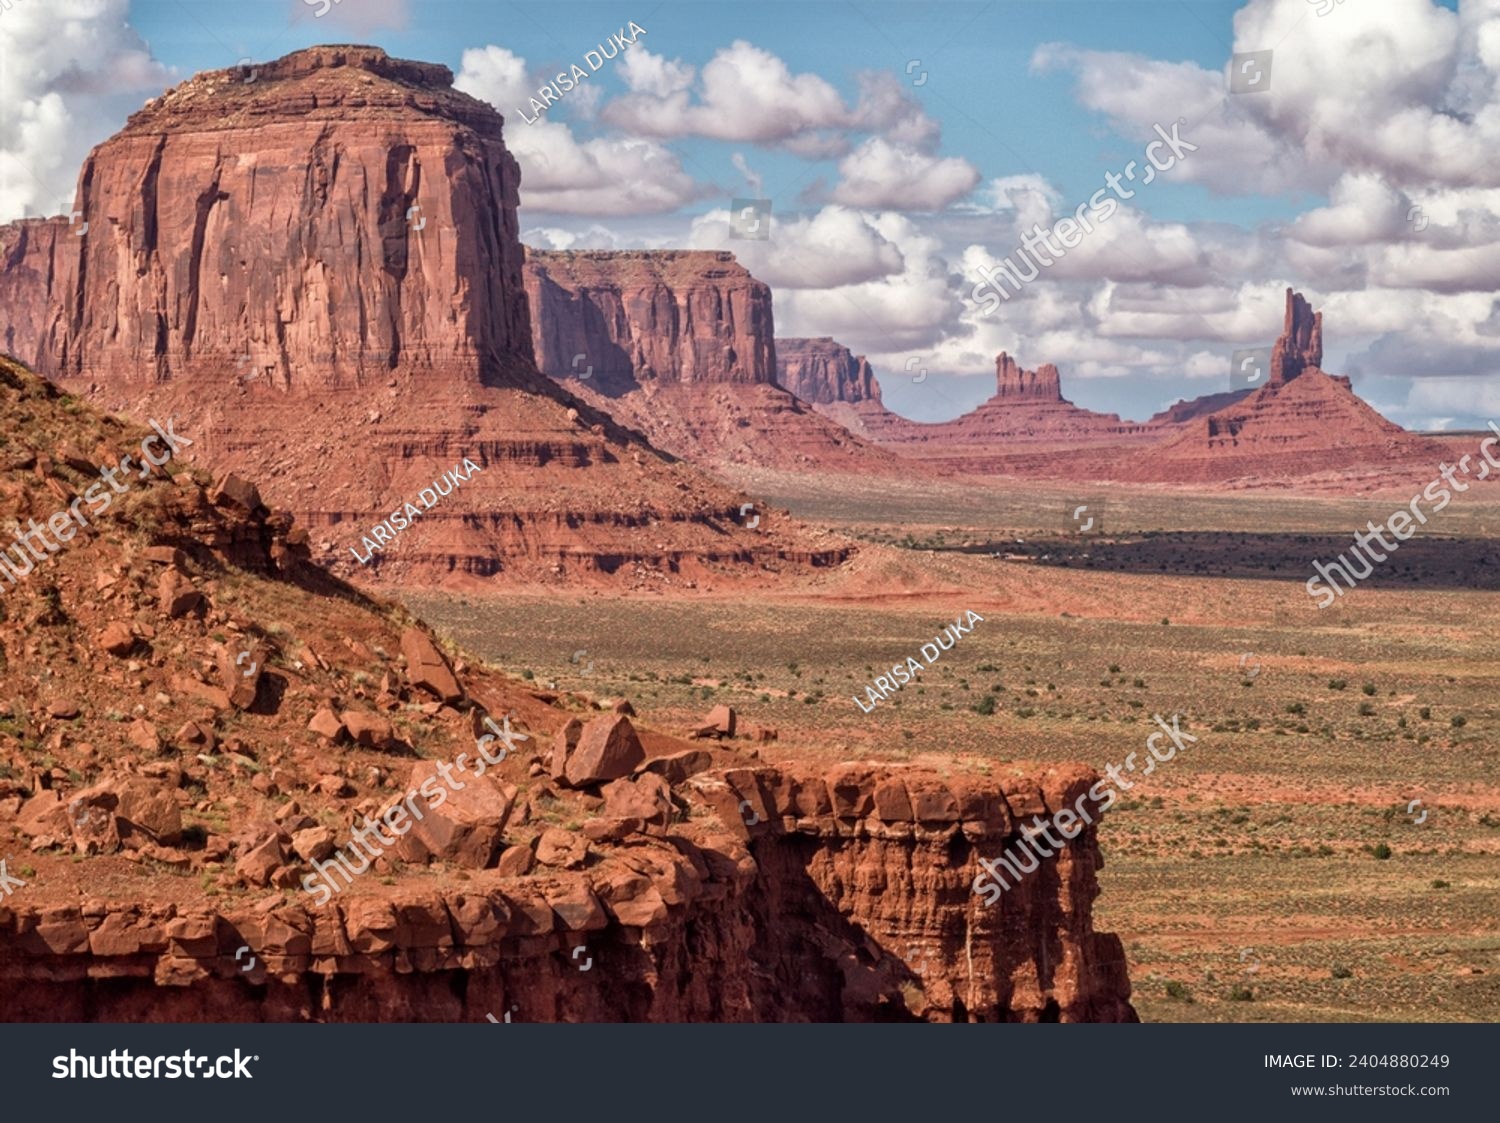 A view on the Monument valley Navajo tribal park,Utah,Arizona,USA. #2404880249